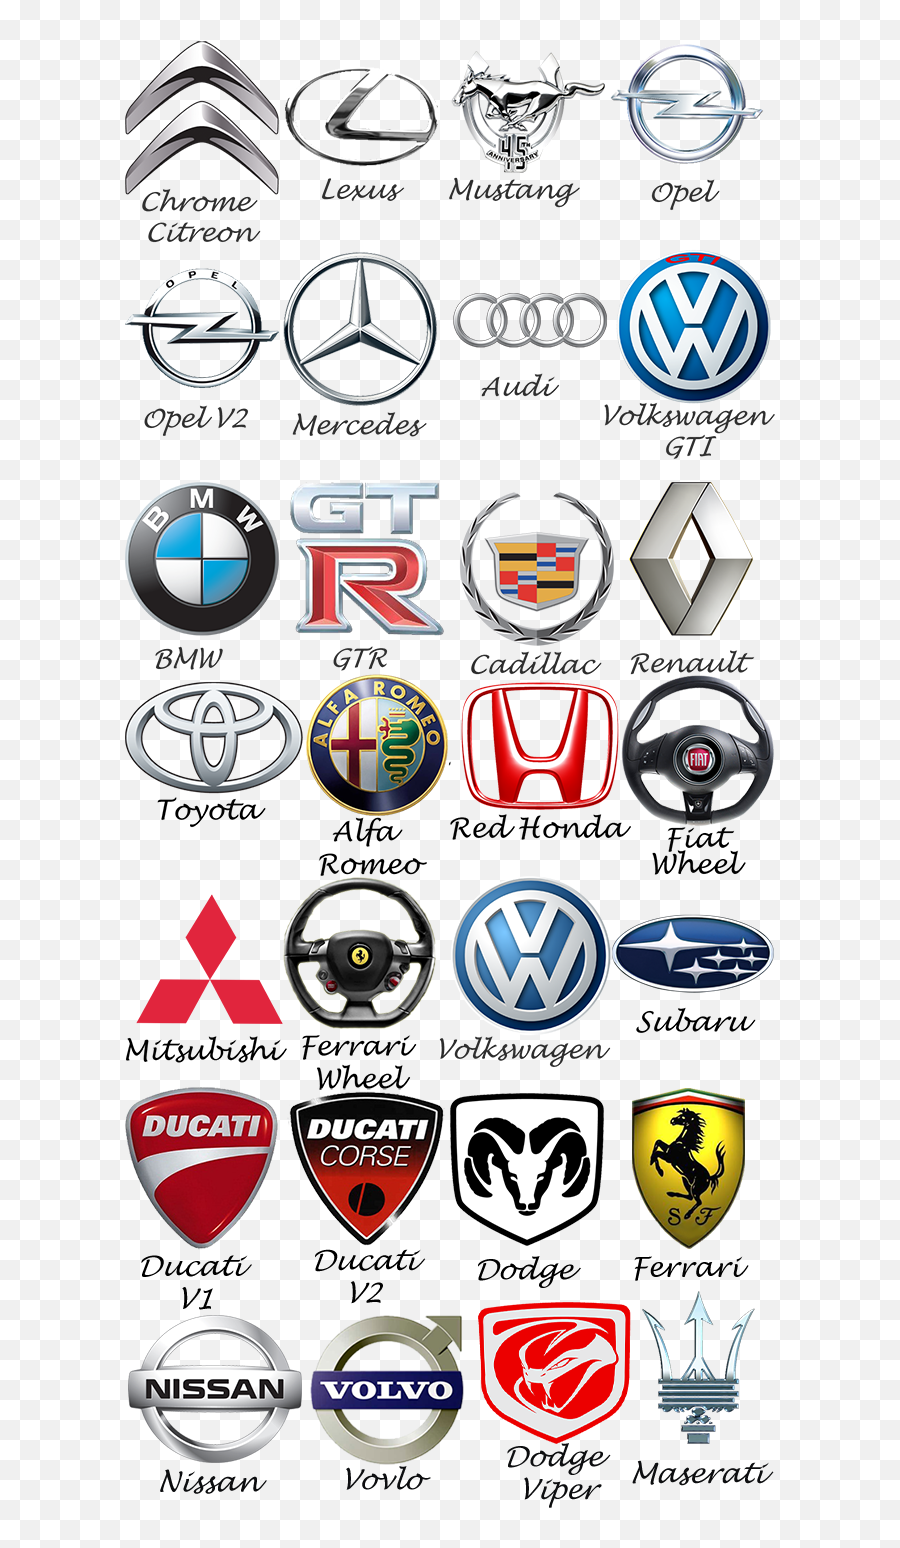 Cars And Their Names List Logo Png - Car Logos And Names List,Car Logo ...